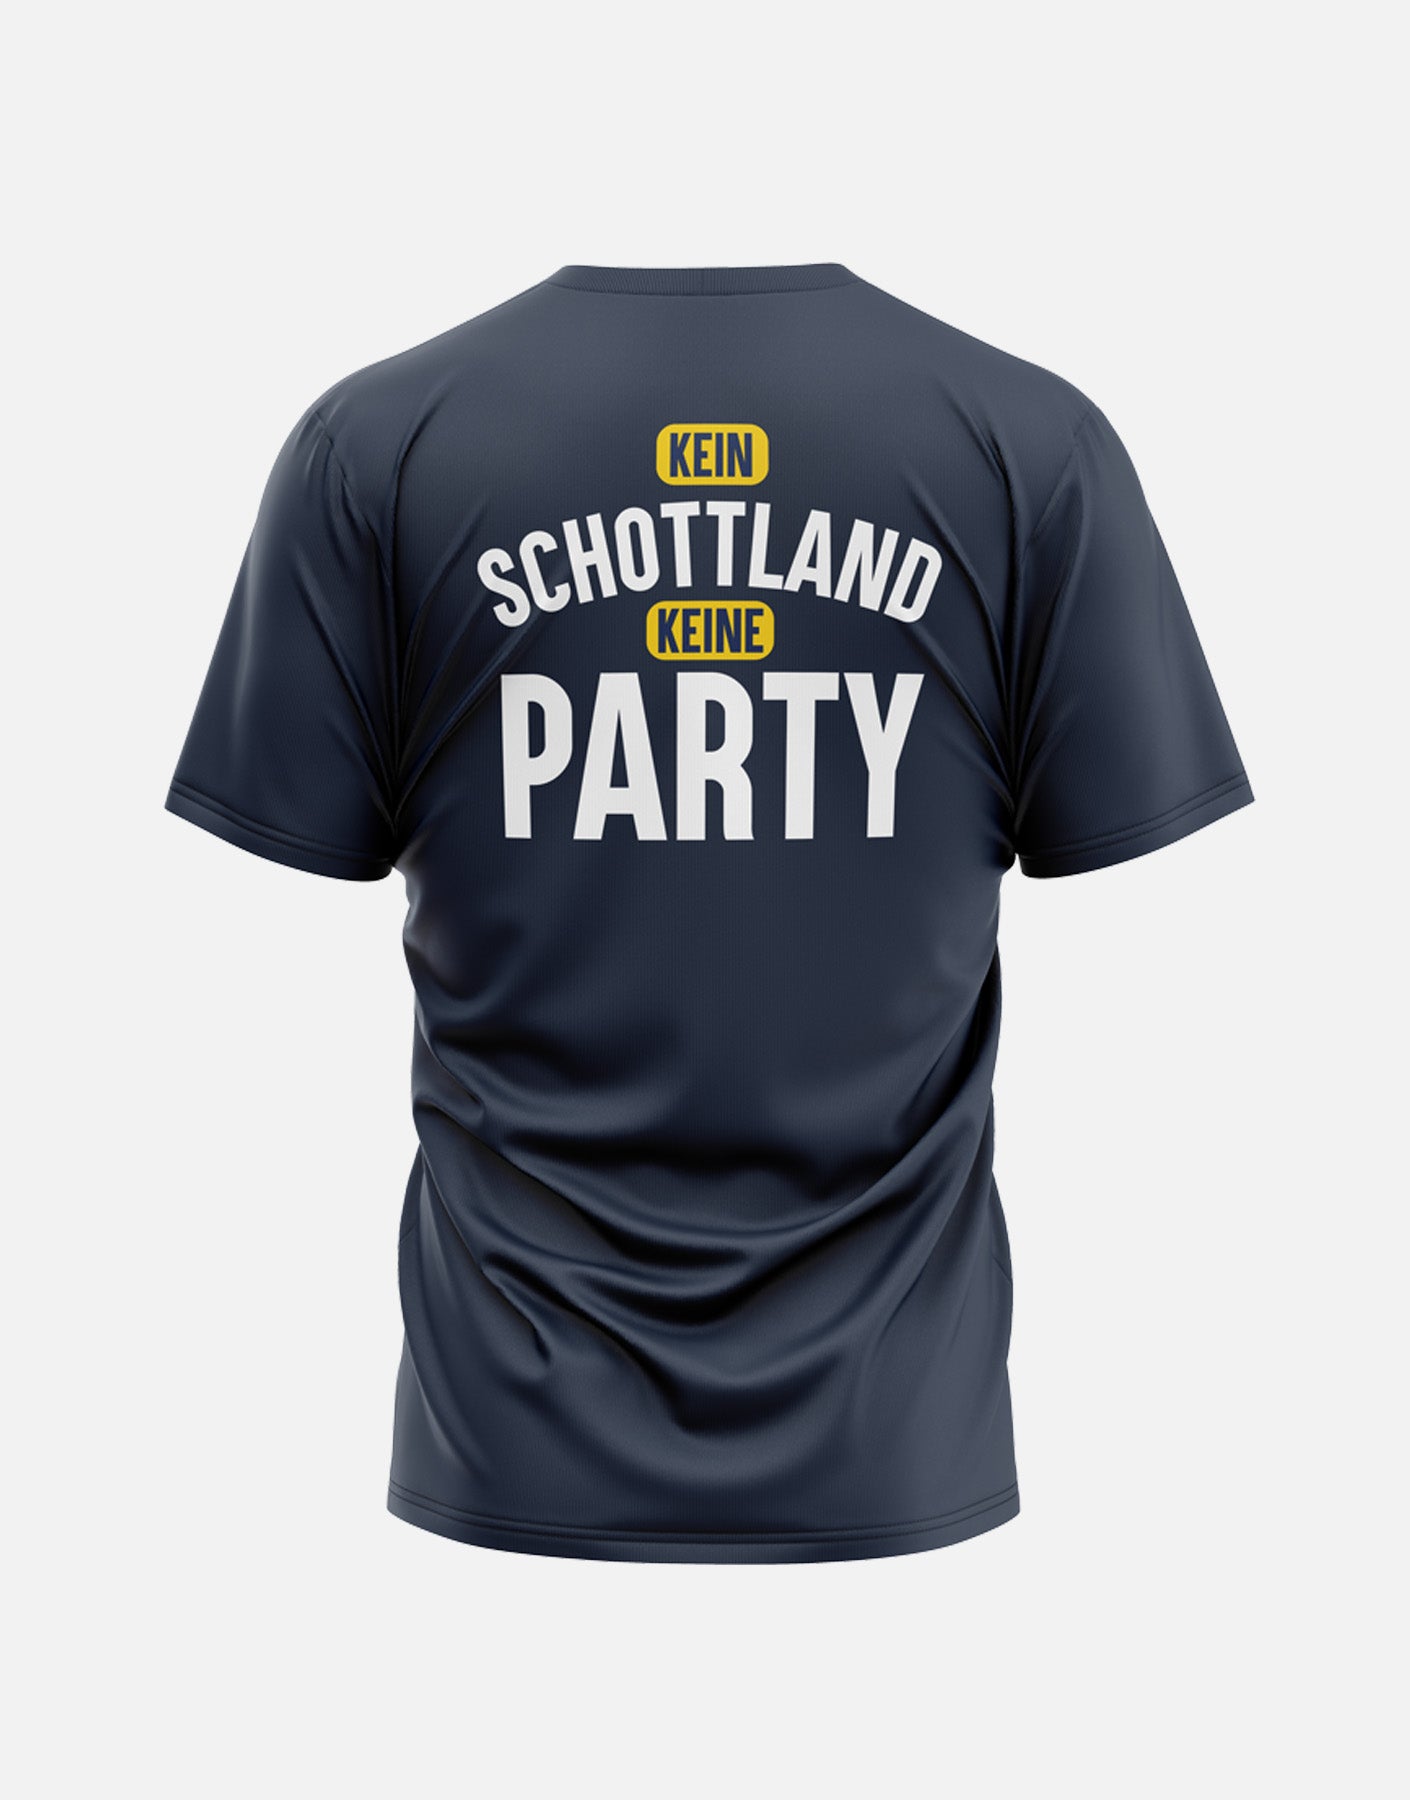 Official Team Scotland 'No Scotland, No Party' T-Shirt - Navy - The World Football Store